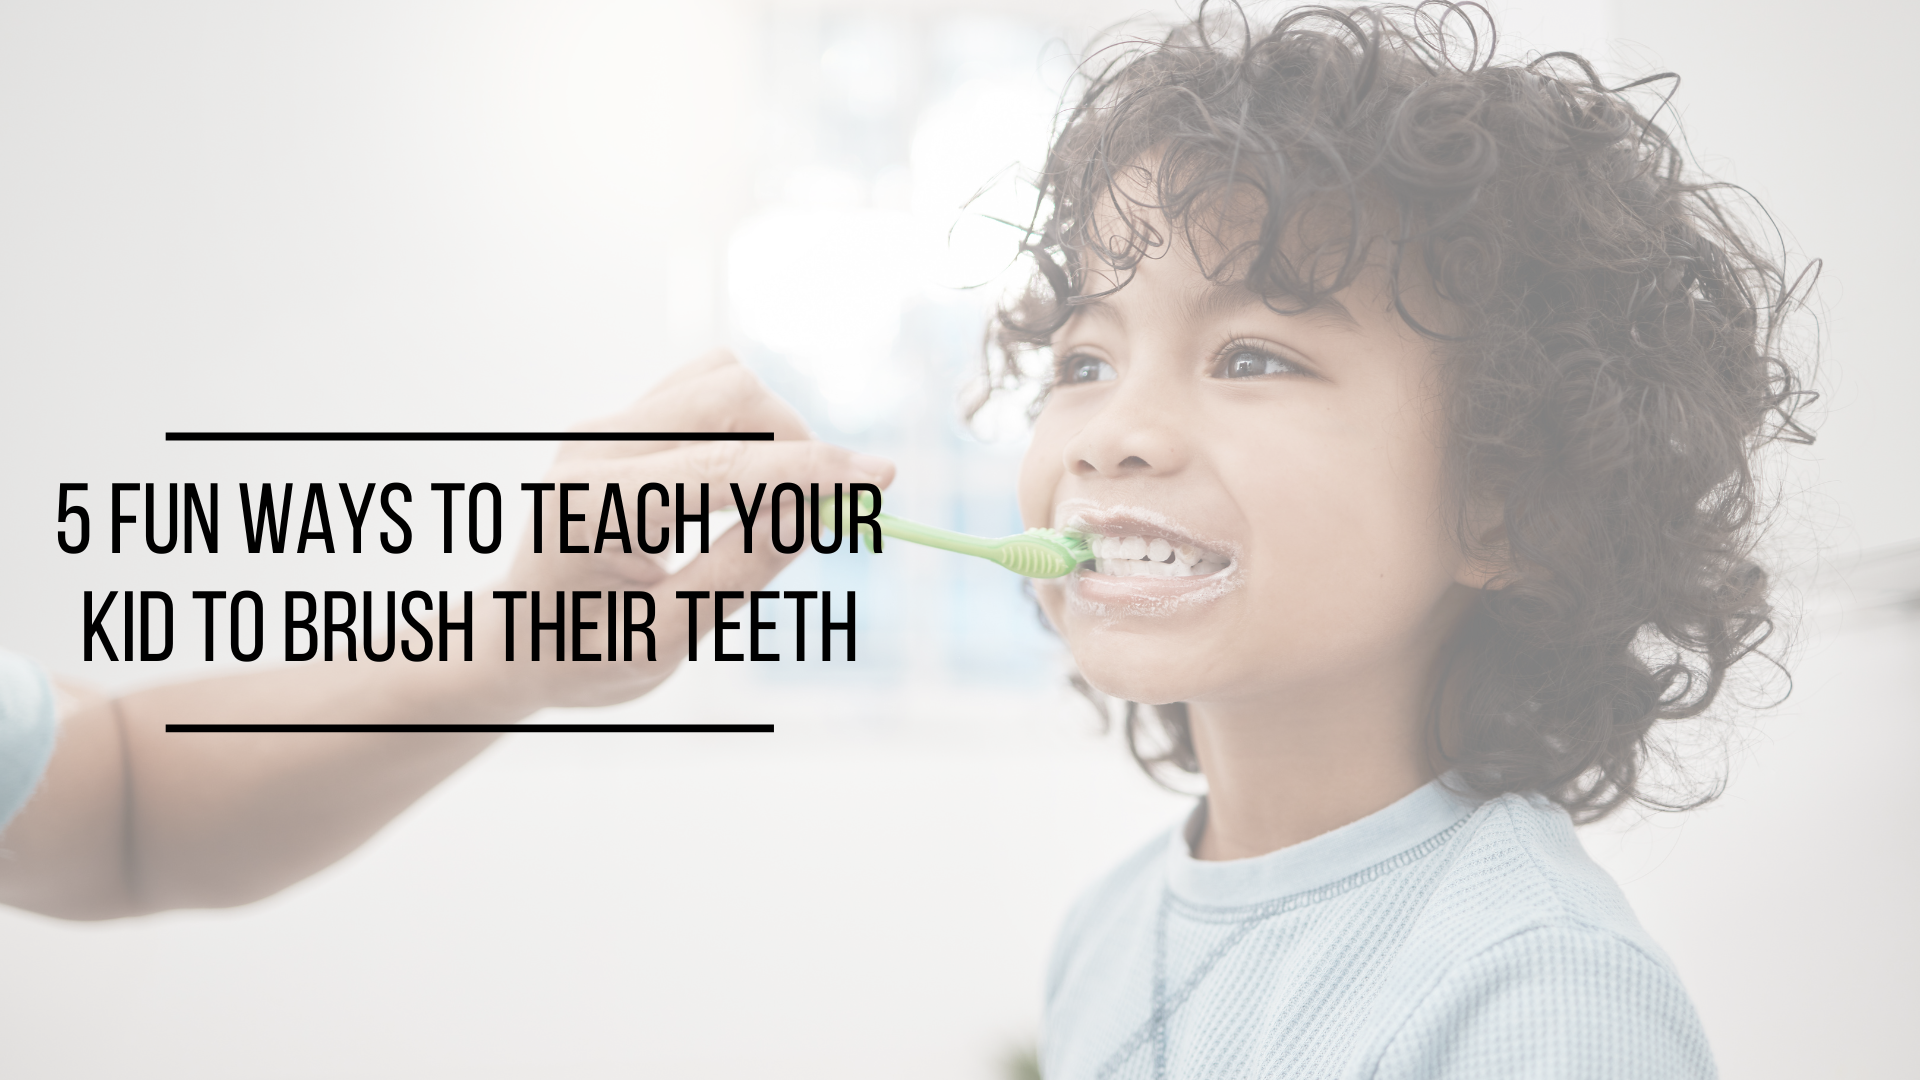 5 Fun Ways to Teach Your Kid to Brush Their Teeth